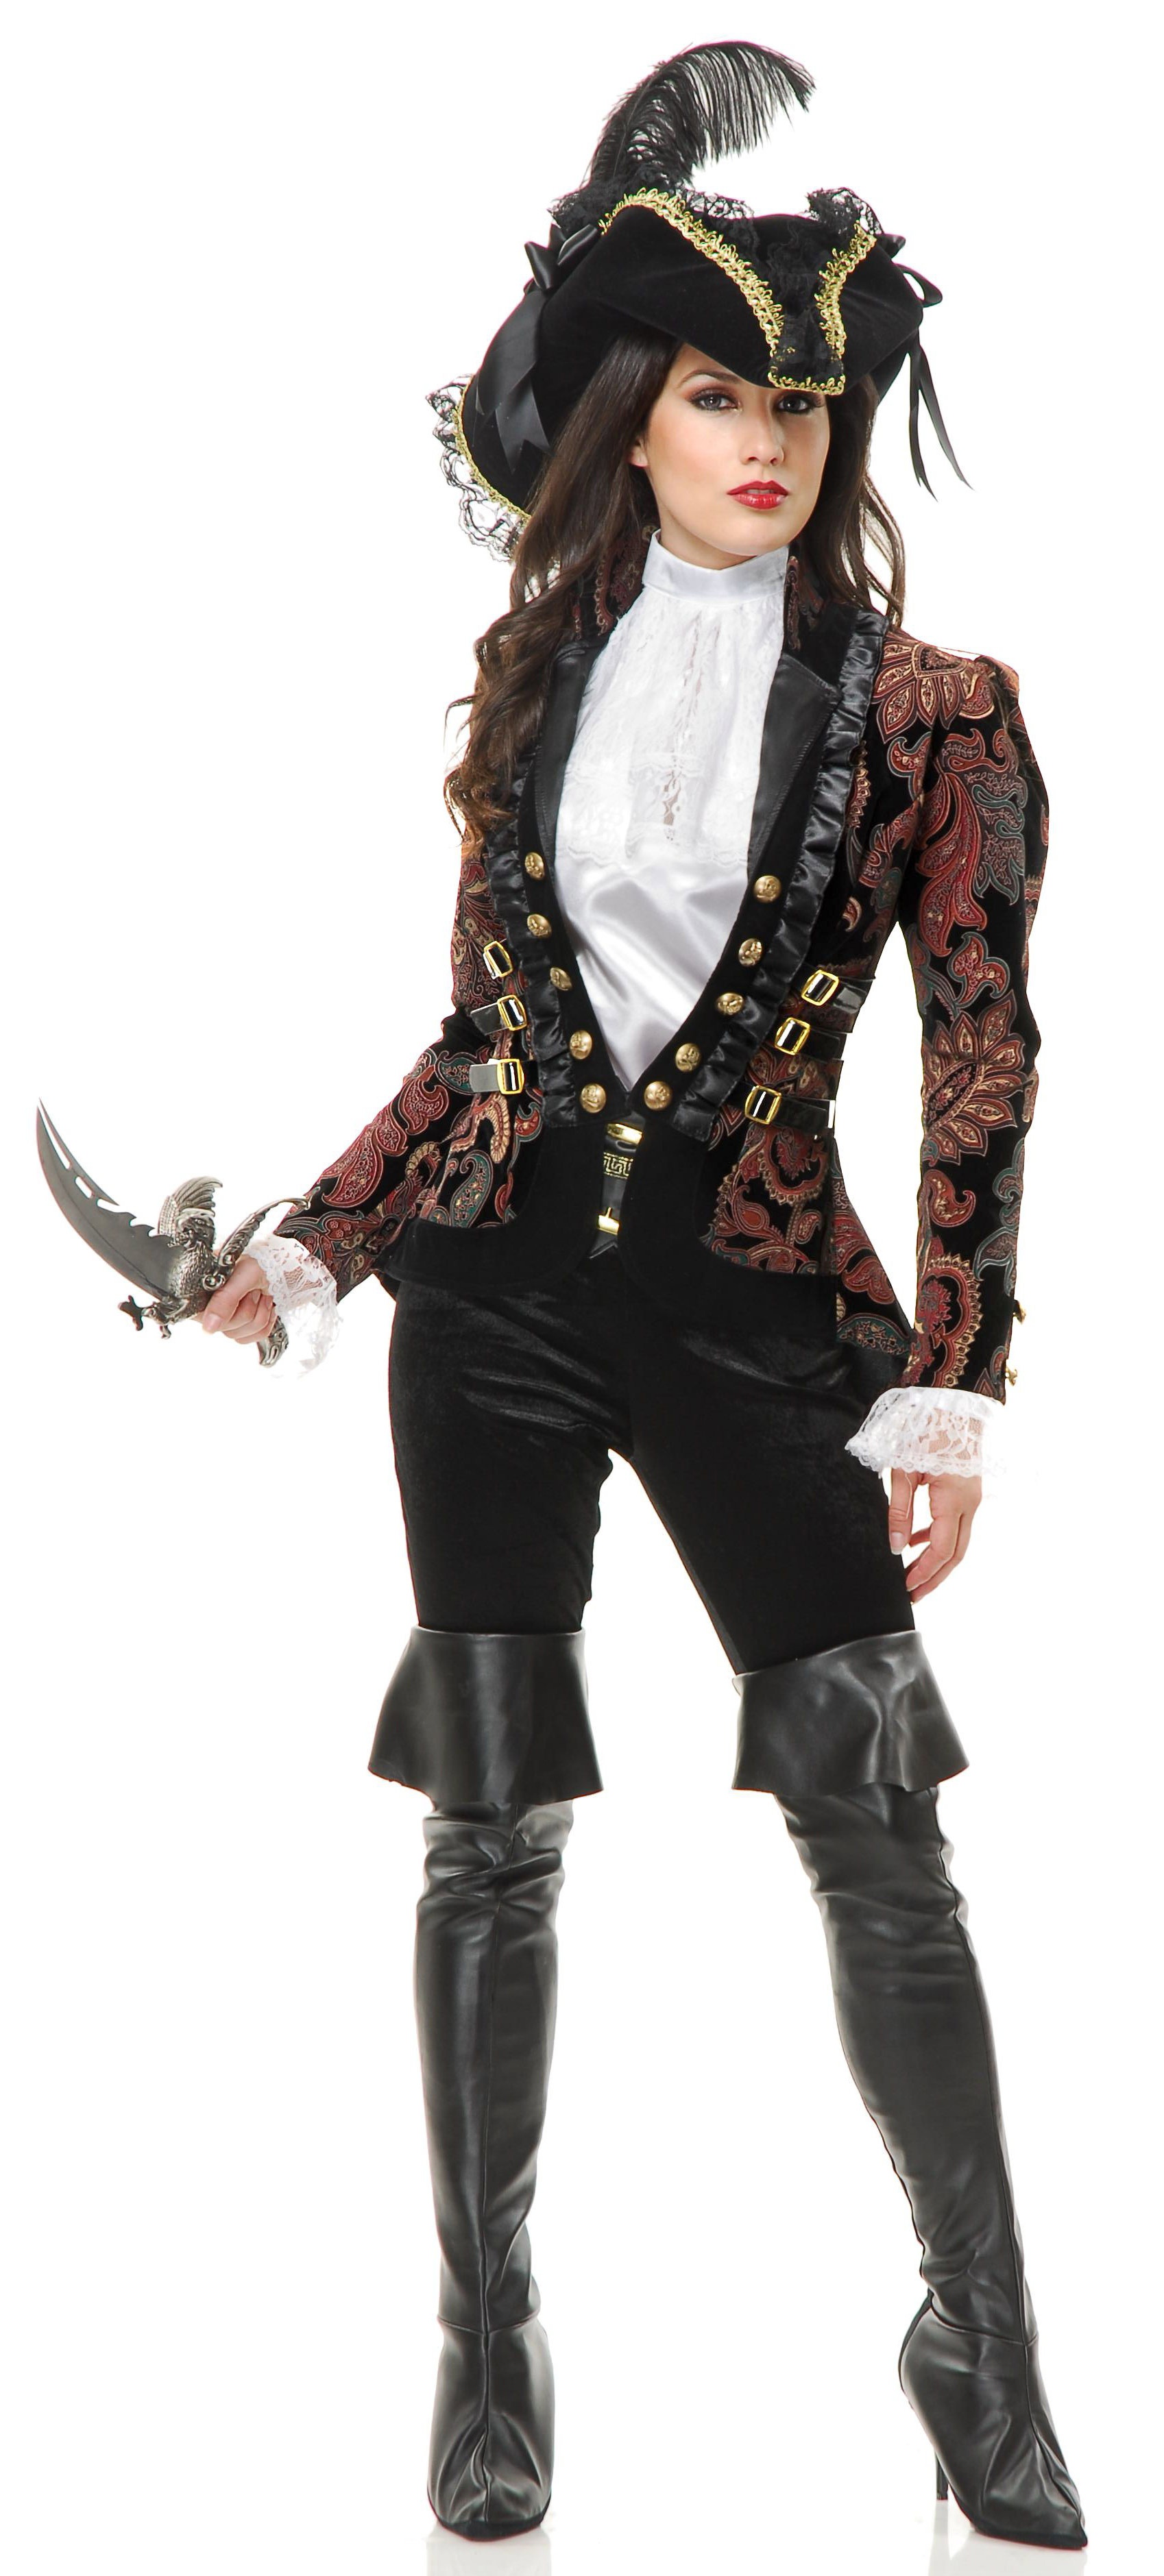 Adult Female Pirate Costume Big Asses Sexy 4531